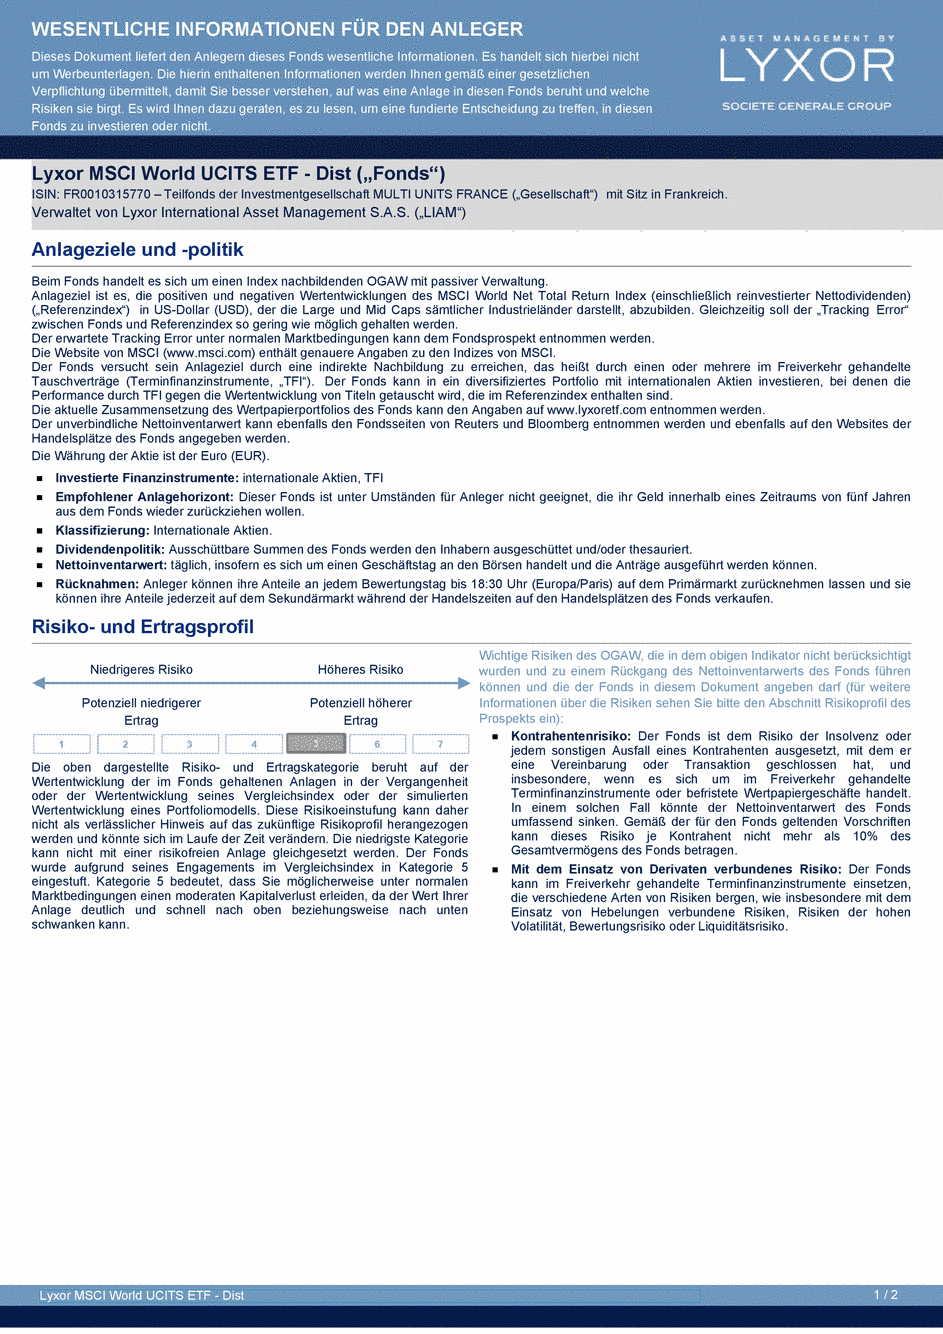 DICI Lyxor MSCI World UCITS ETF - Dist - 19/02/2020 - German